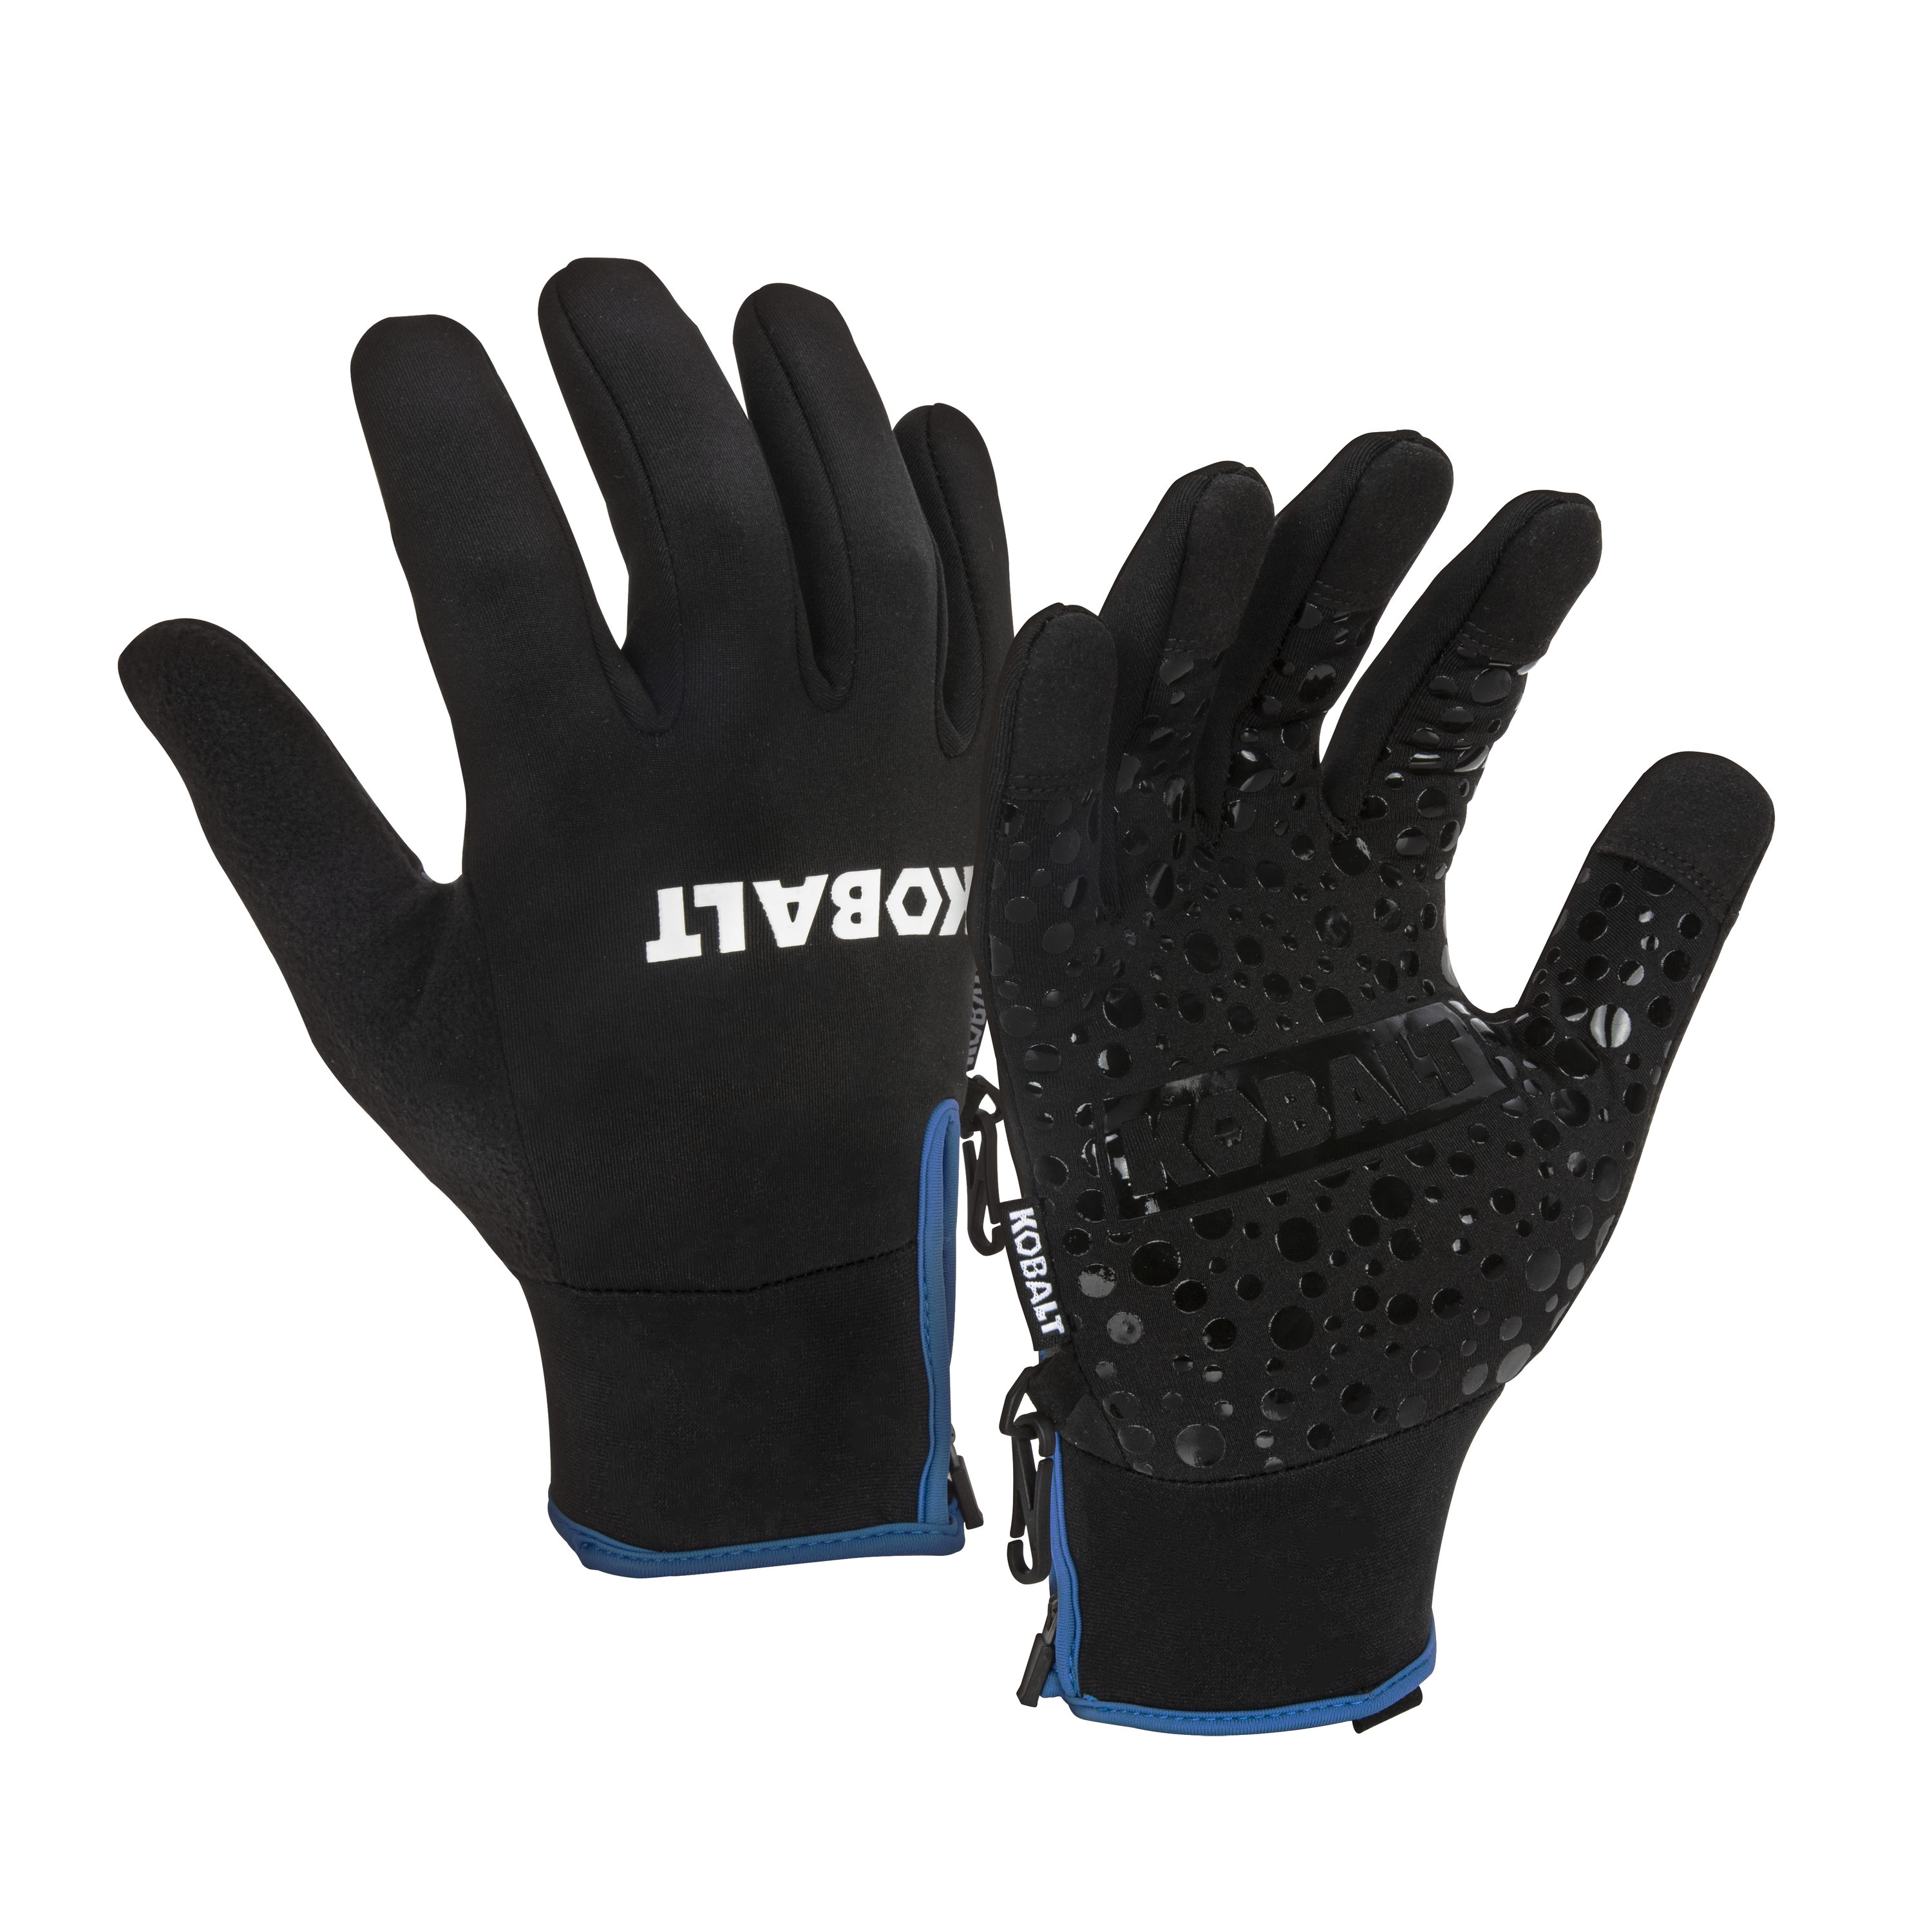 Hardy Synthetic Leather/Spandex Mechanics Gloves (Medium)